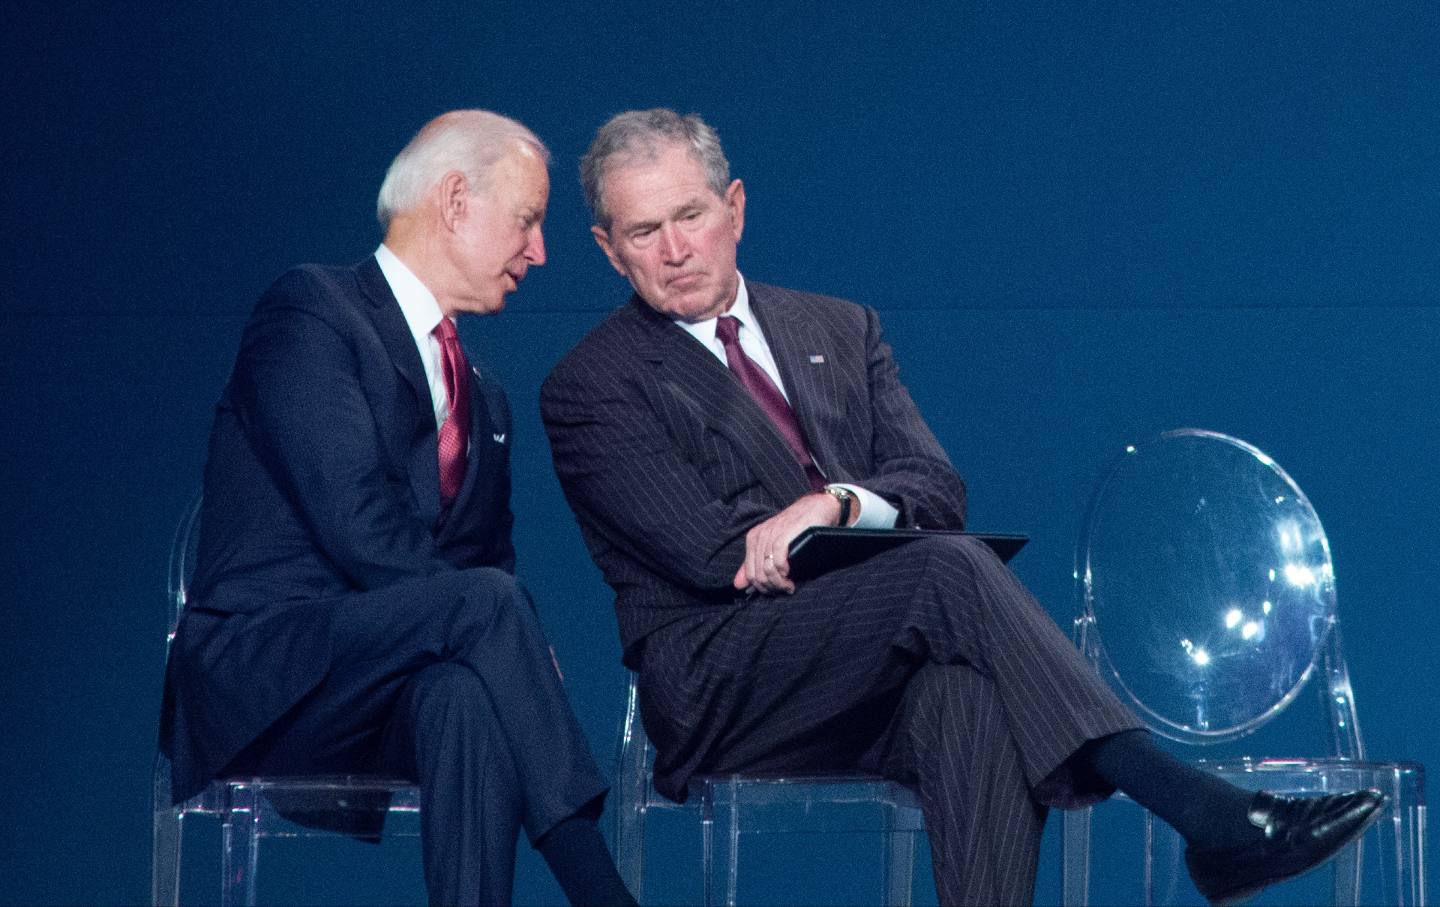 Joe Biden and George W. Bush await presentation of the 2018 Liberty Medal at The National Constitution Center on November 11, 2018 in Philadelphia, Pennsylvania.